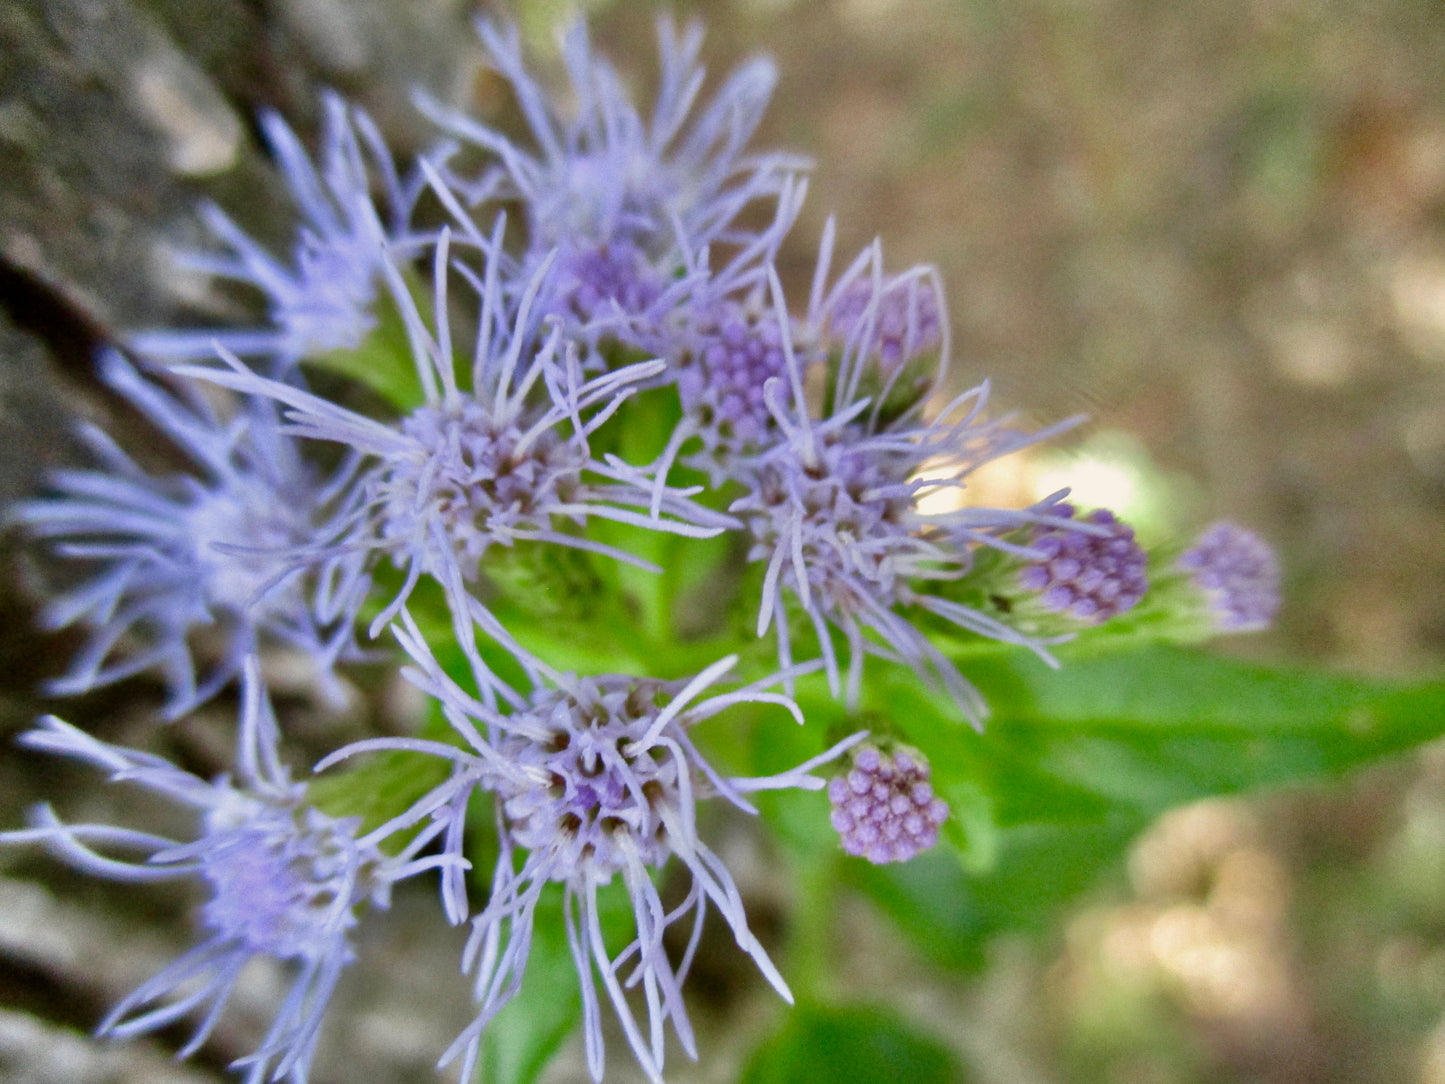 Photograph of A Purple Flower